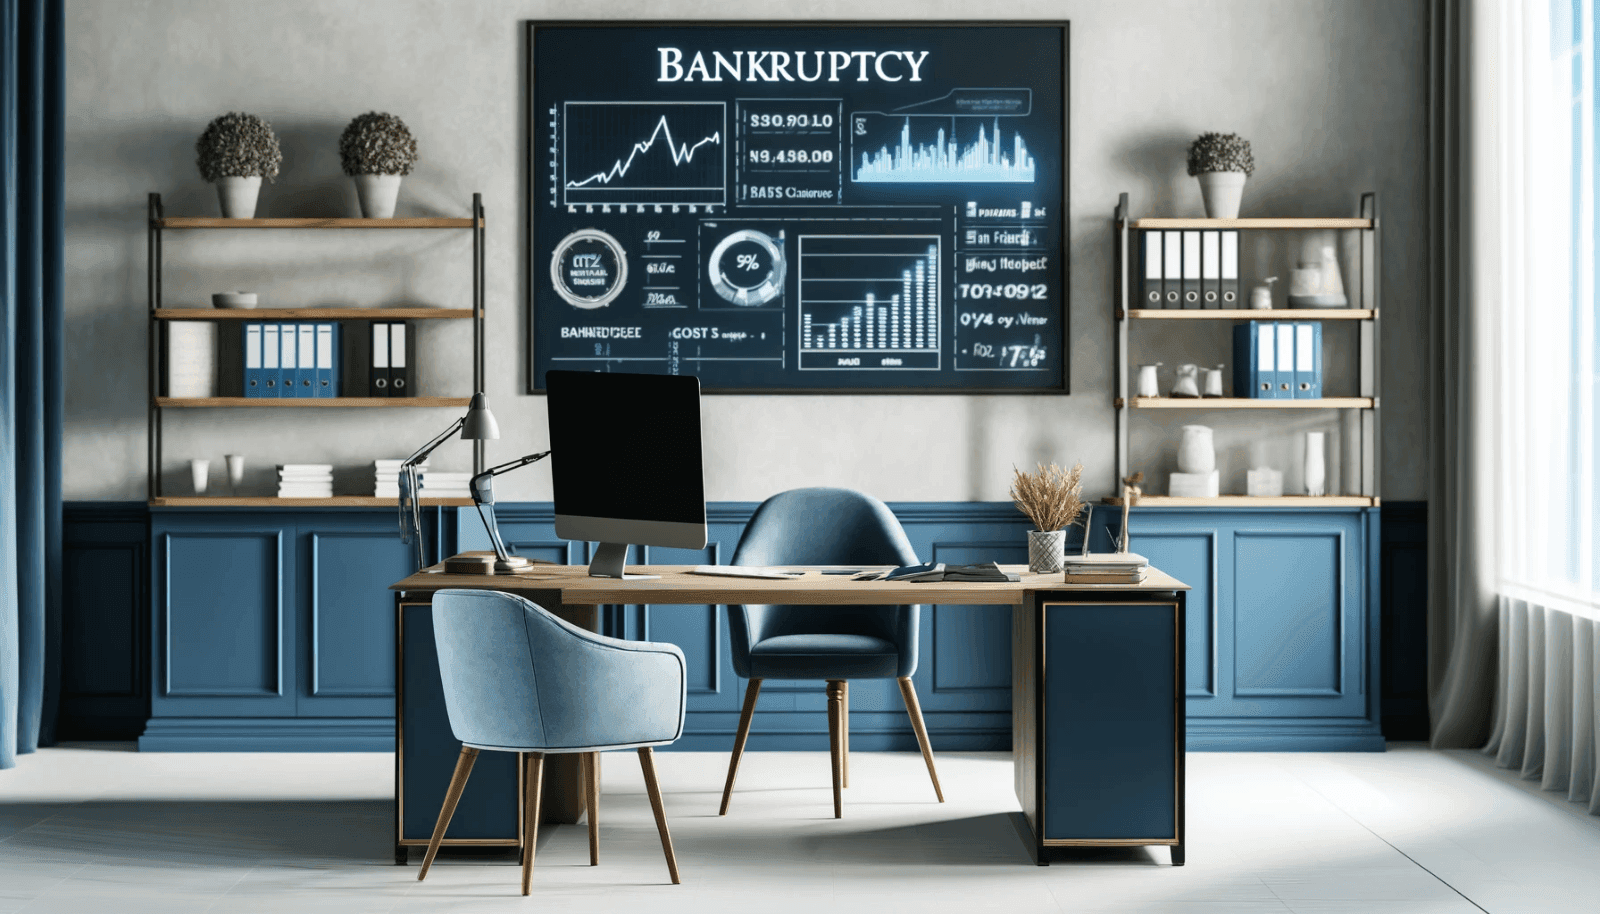 Bankruptcy Loans